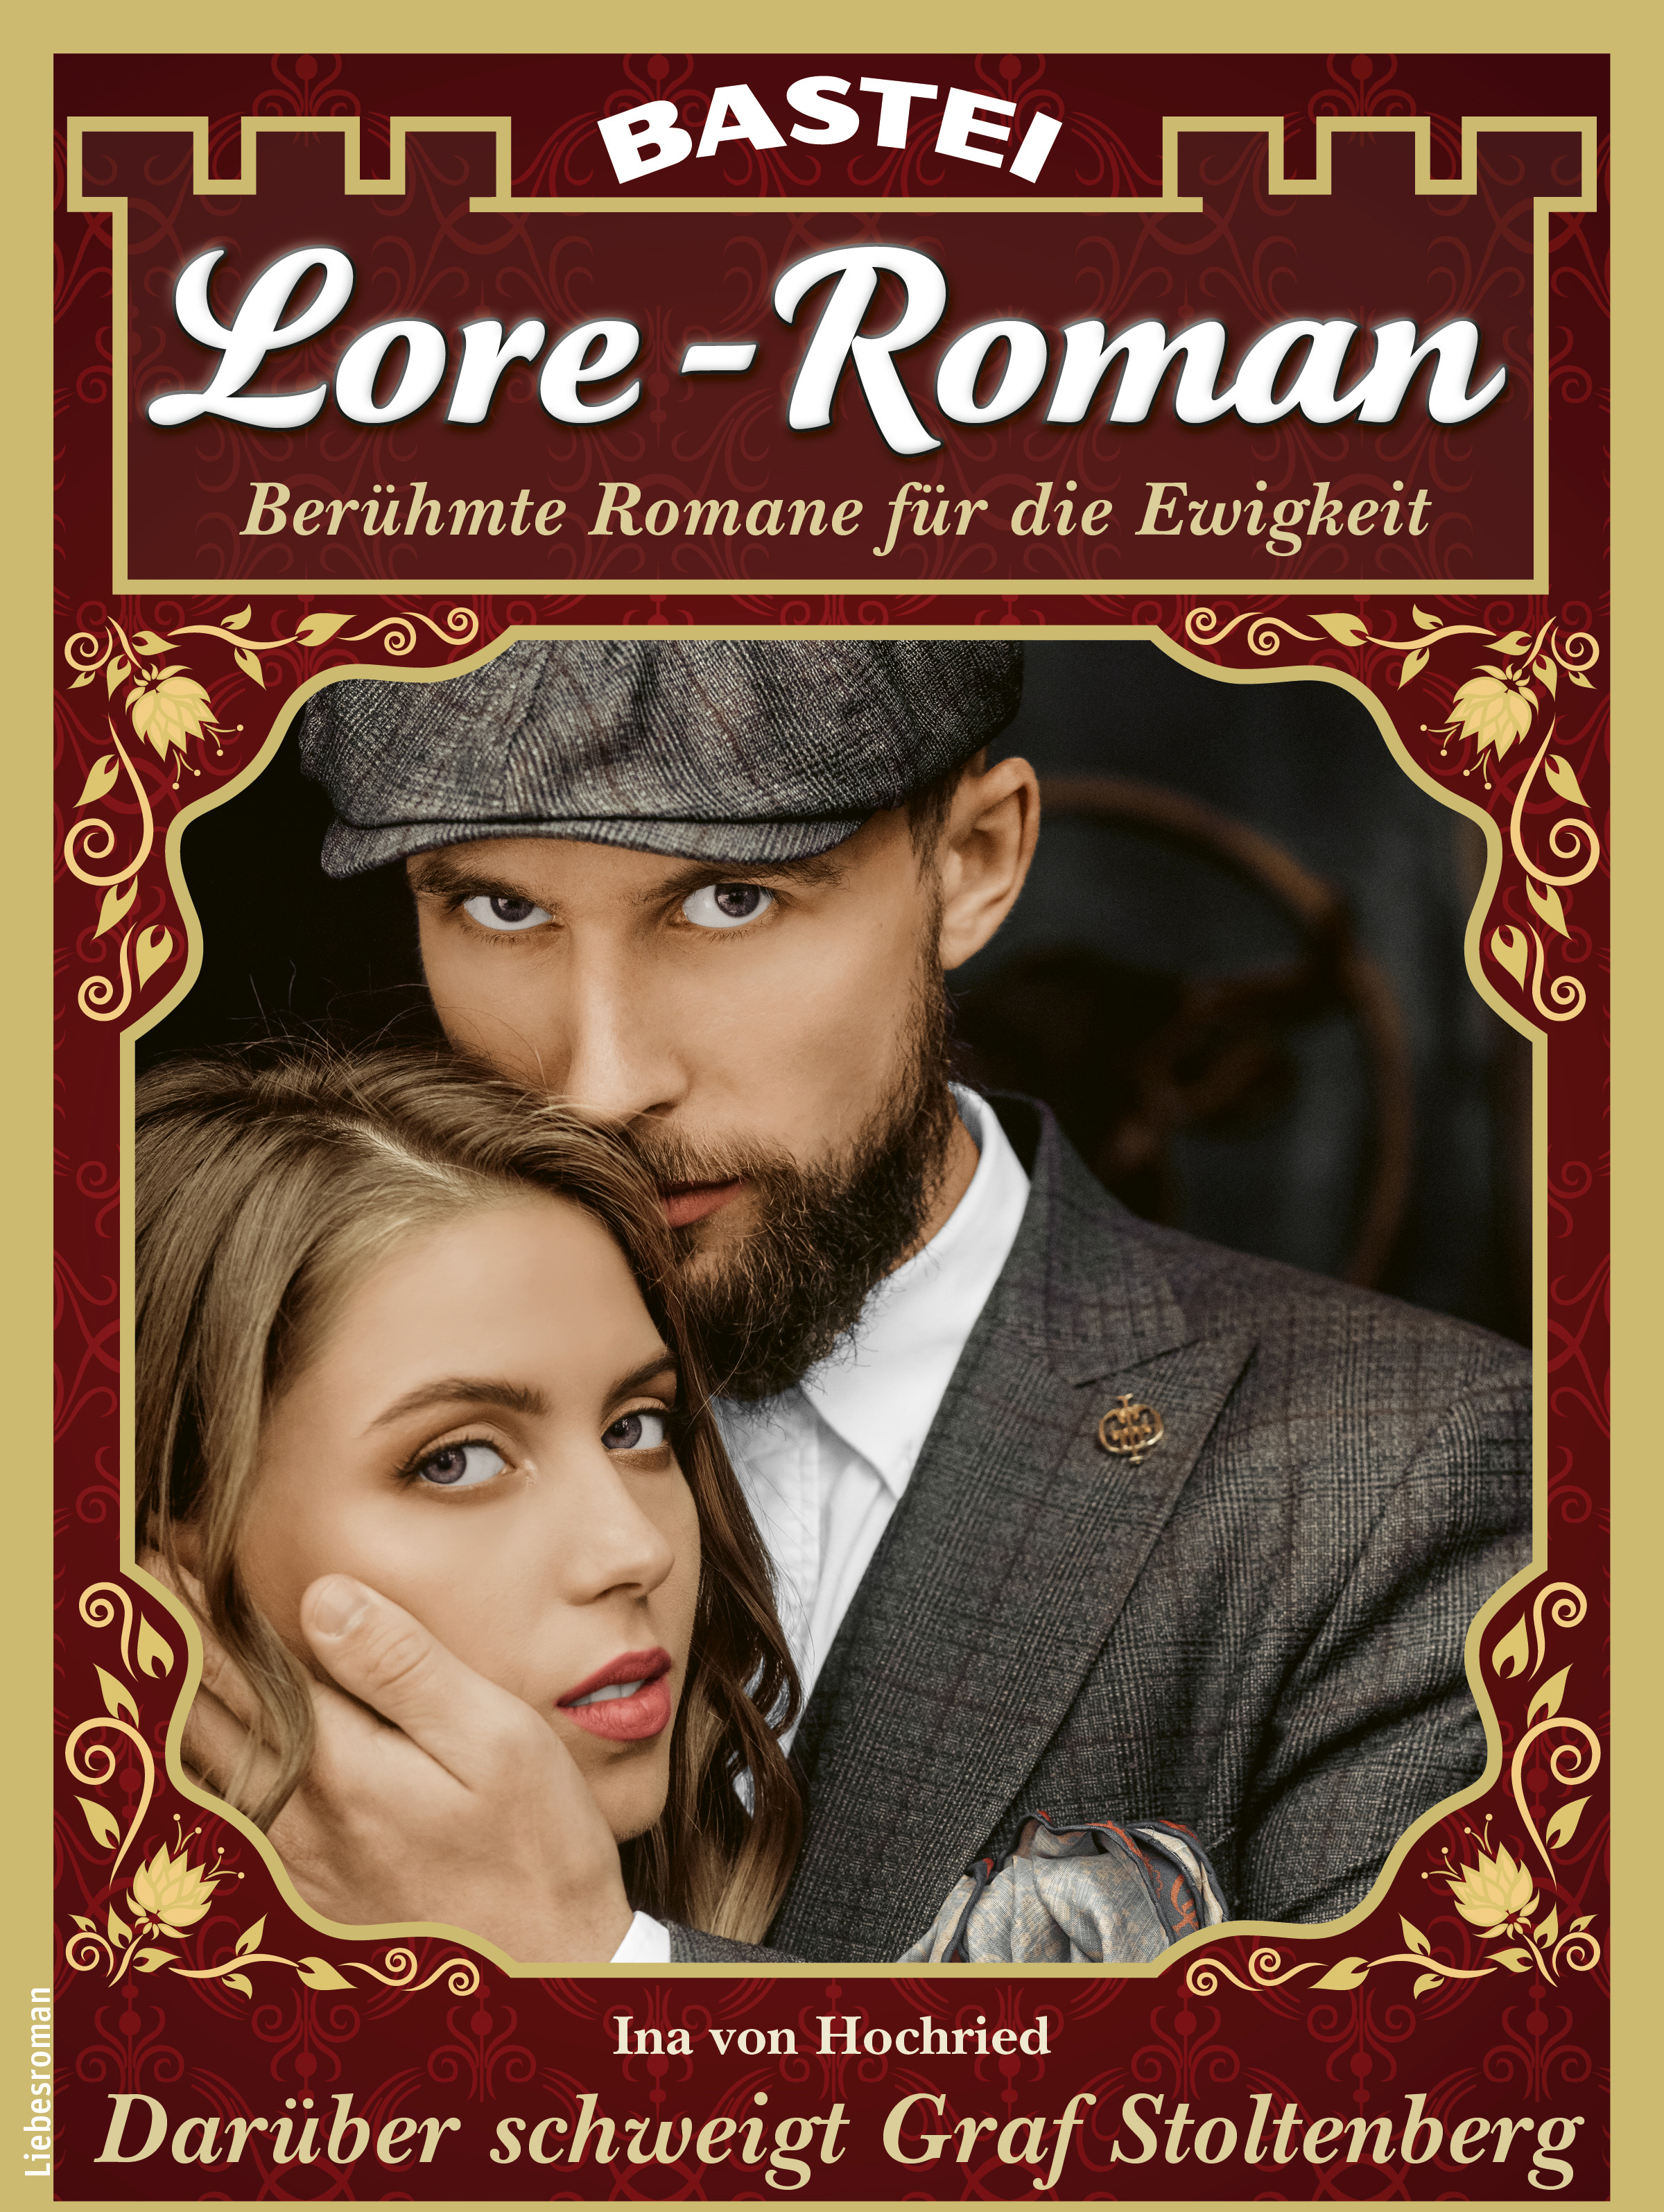 Lore-Roman 141